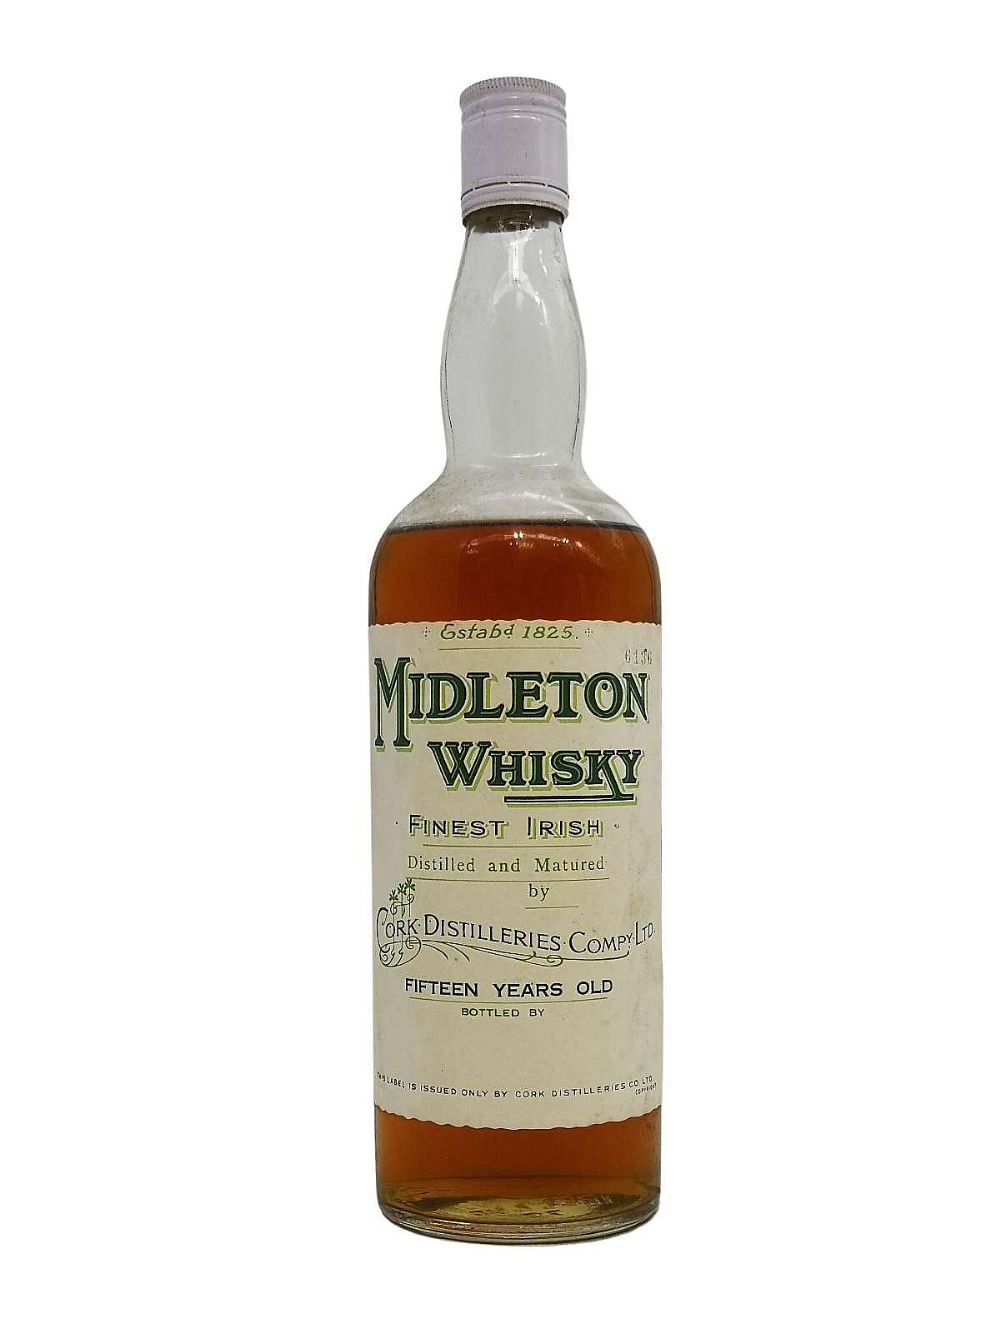 Midleton Whisky 15 year old Finest Irish, Cork Distilleries Compy. Ltd.